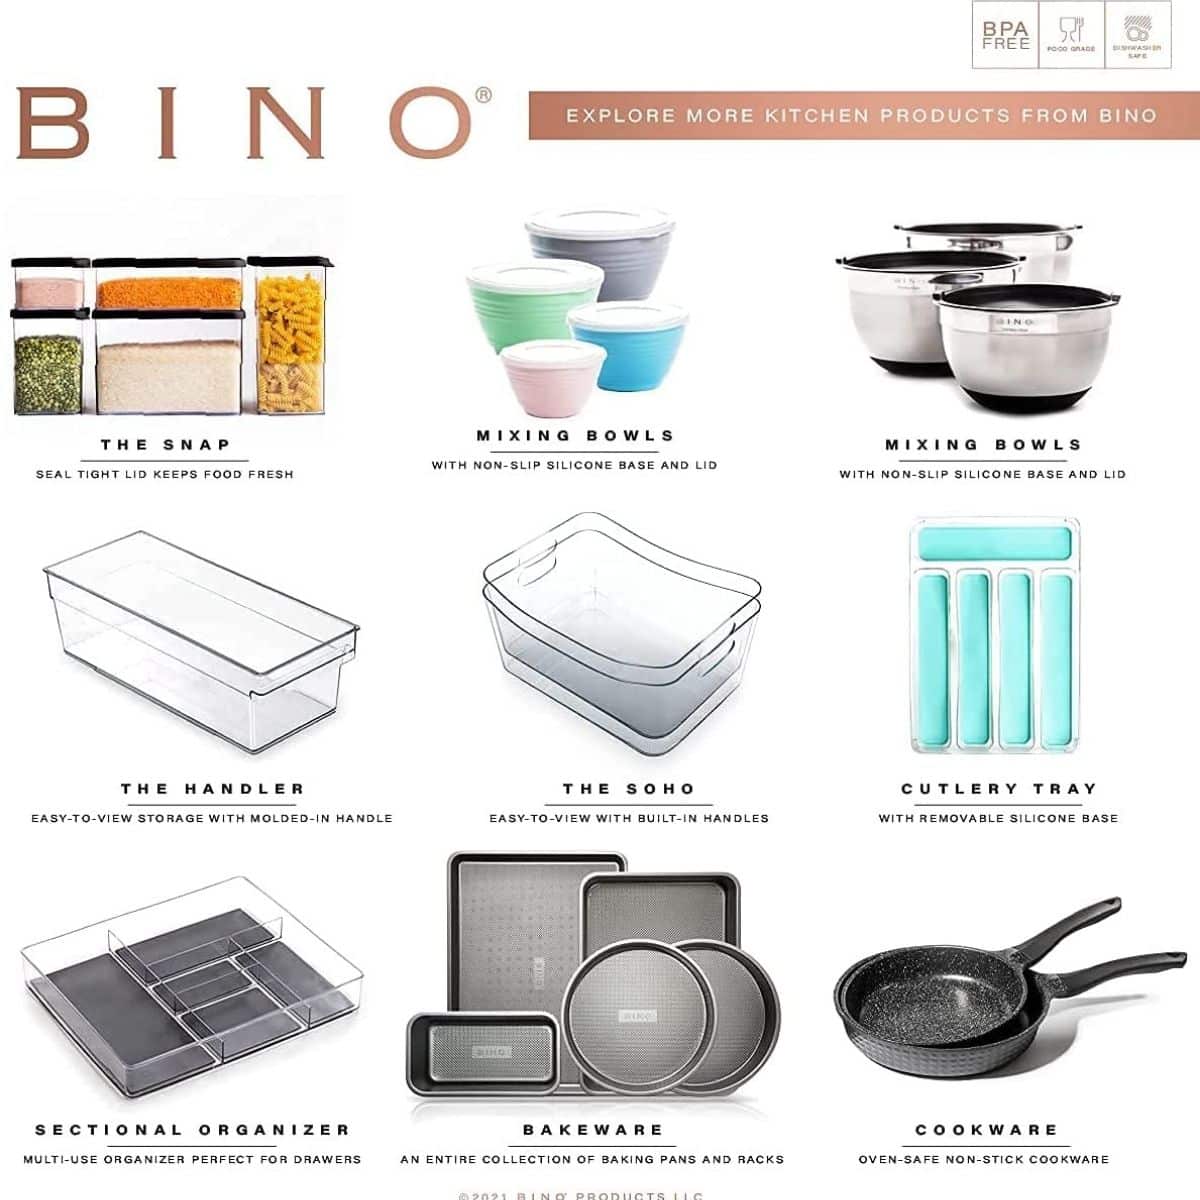 BINO, Plastic Storage Bins, X-Small – 5 Pack, THE LUCID COLLECTION, Multi-Use Organizer Bins, Built-In Handles, BPA-Free, Pantry Organization, Home Organization, Fridge Organizer